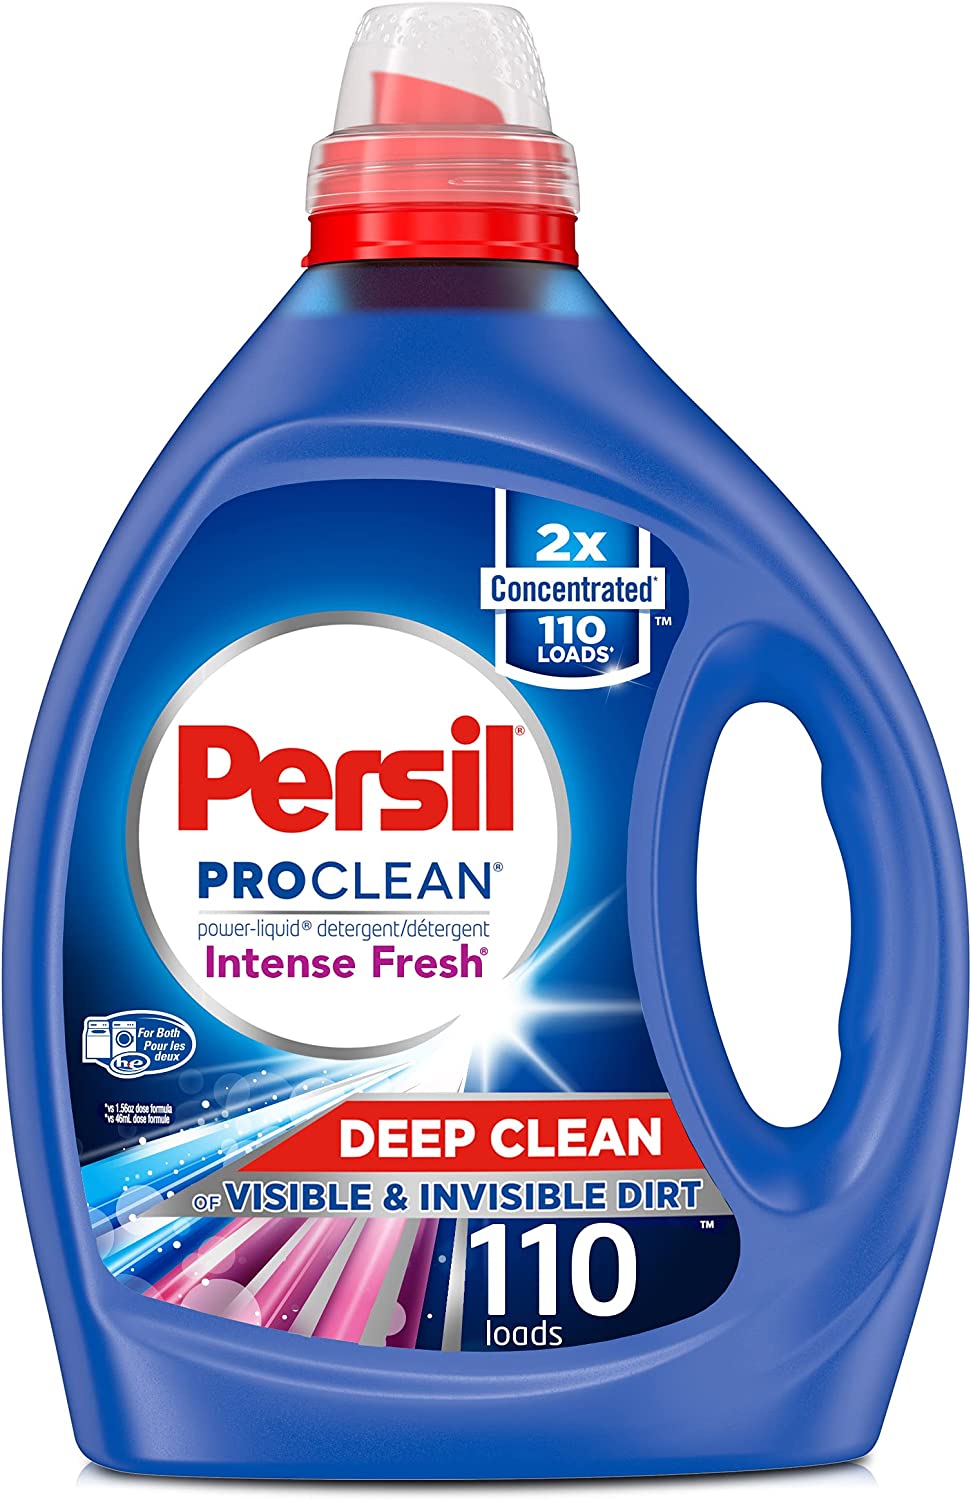 Persil Liquid Detergent ProClean Intense Fresh